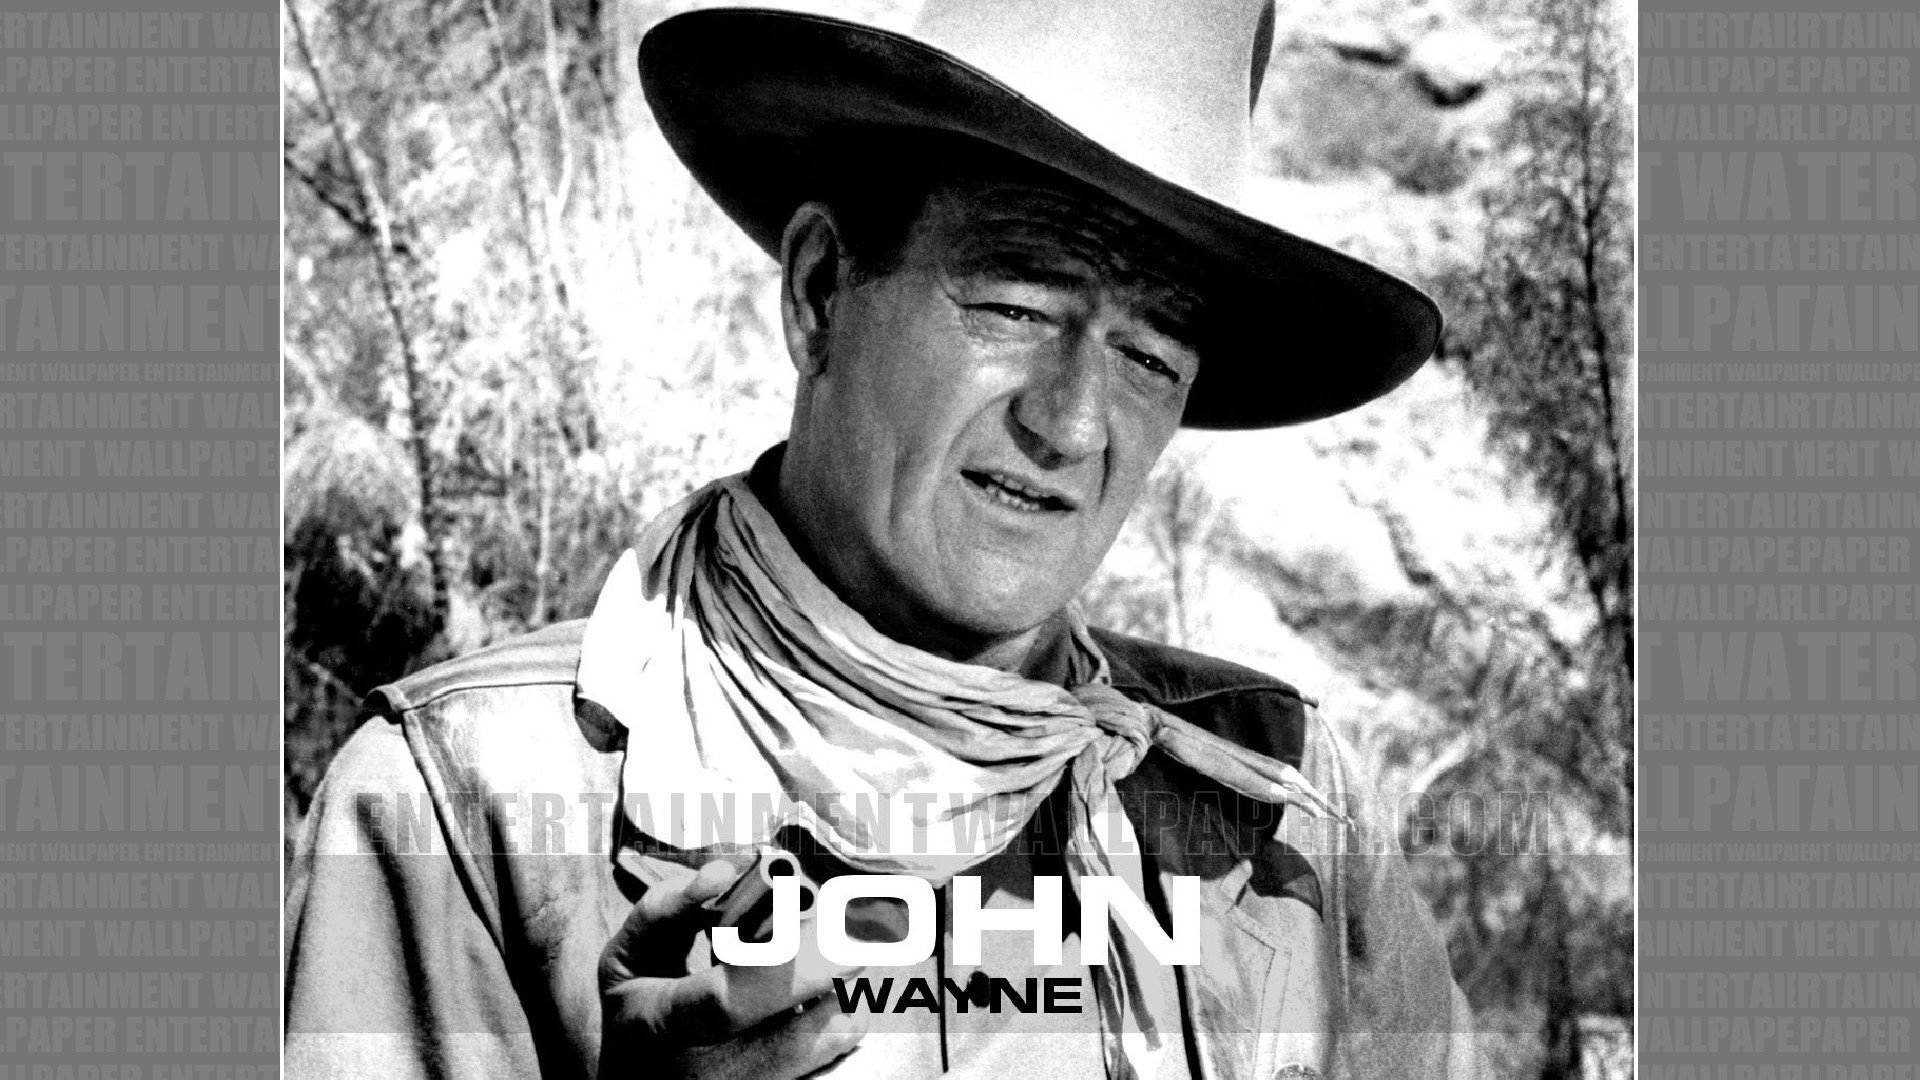 1920x1080 John Wayne Wallpaper - Original size, download now.